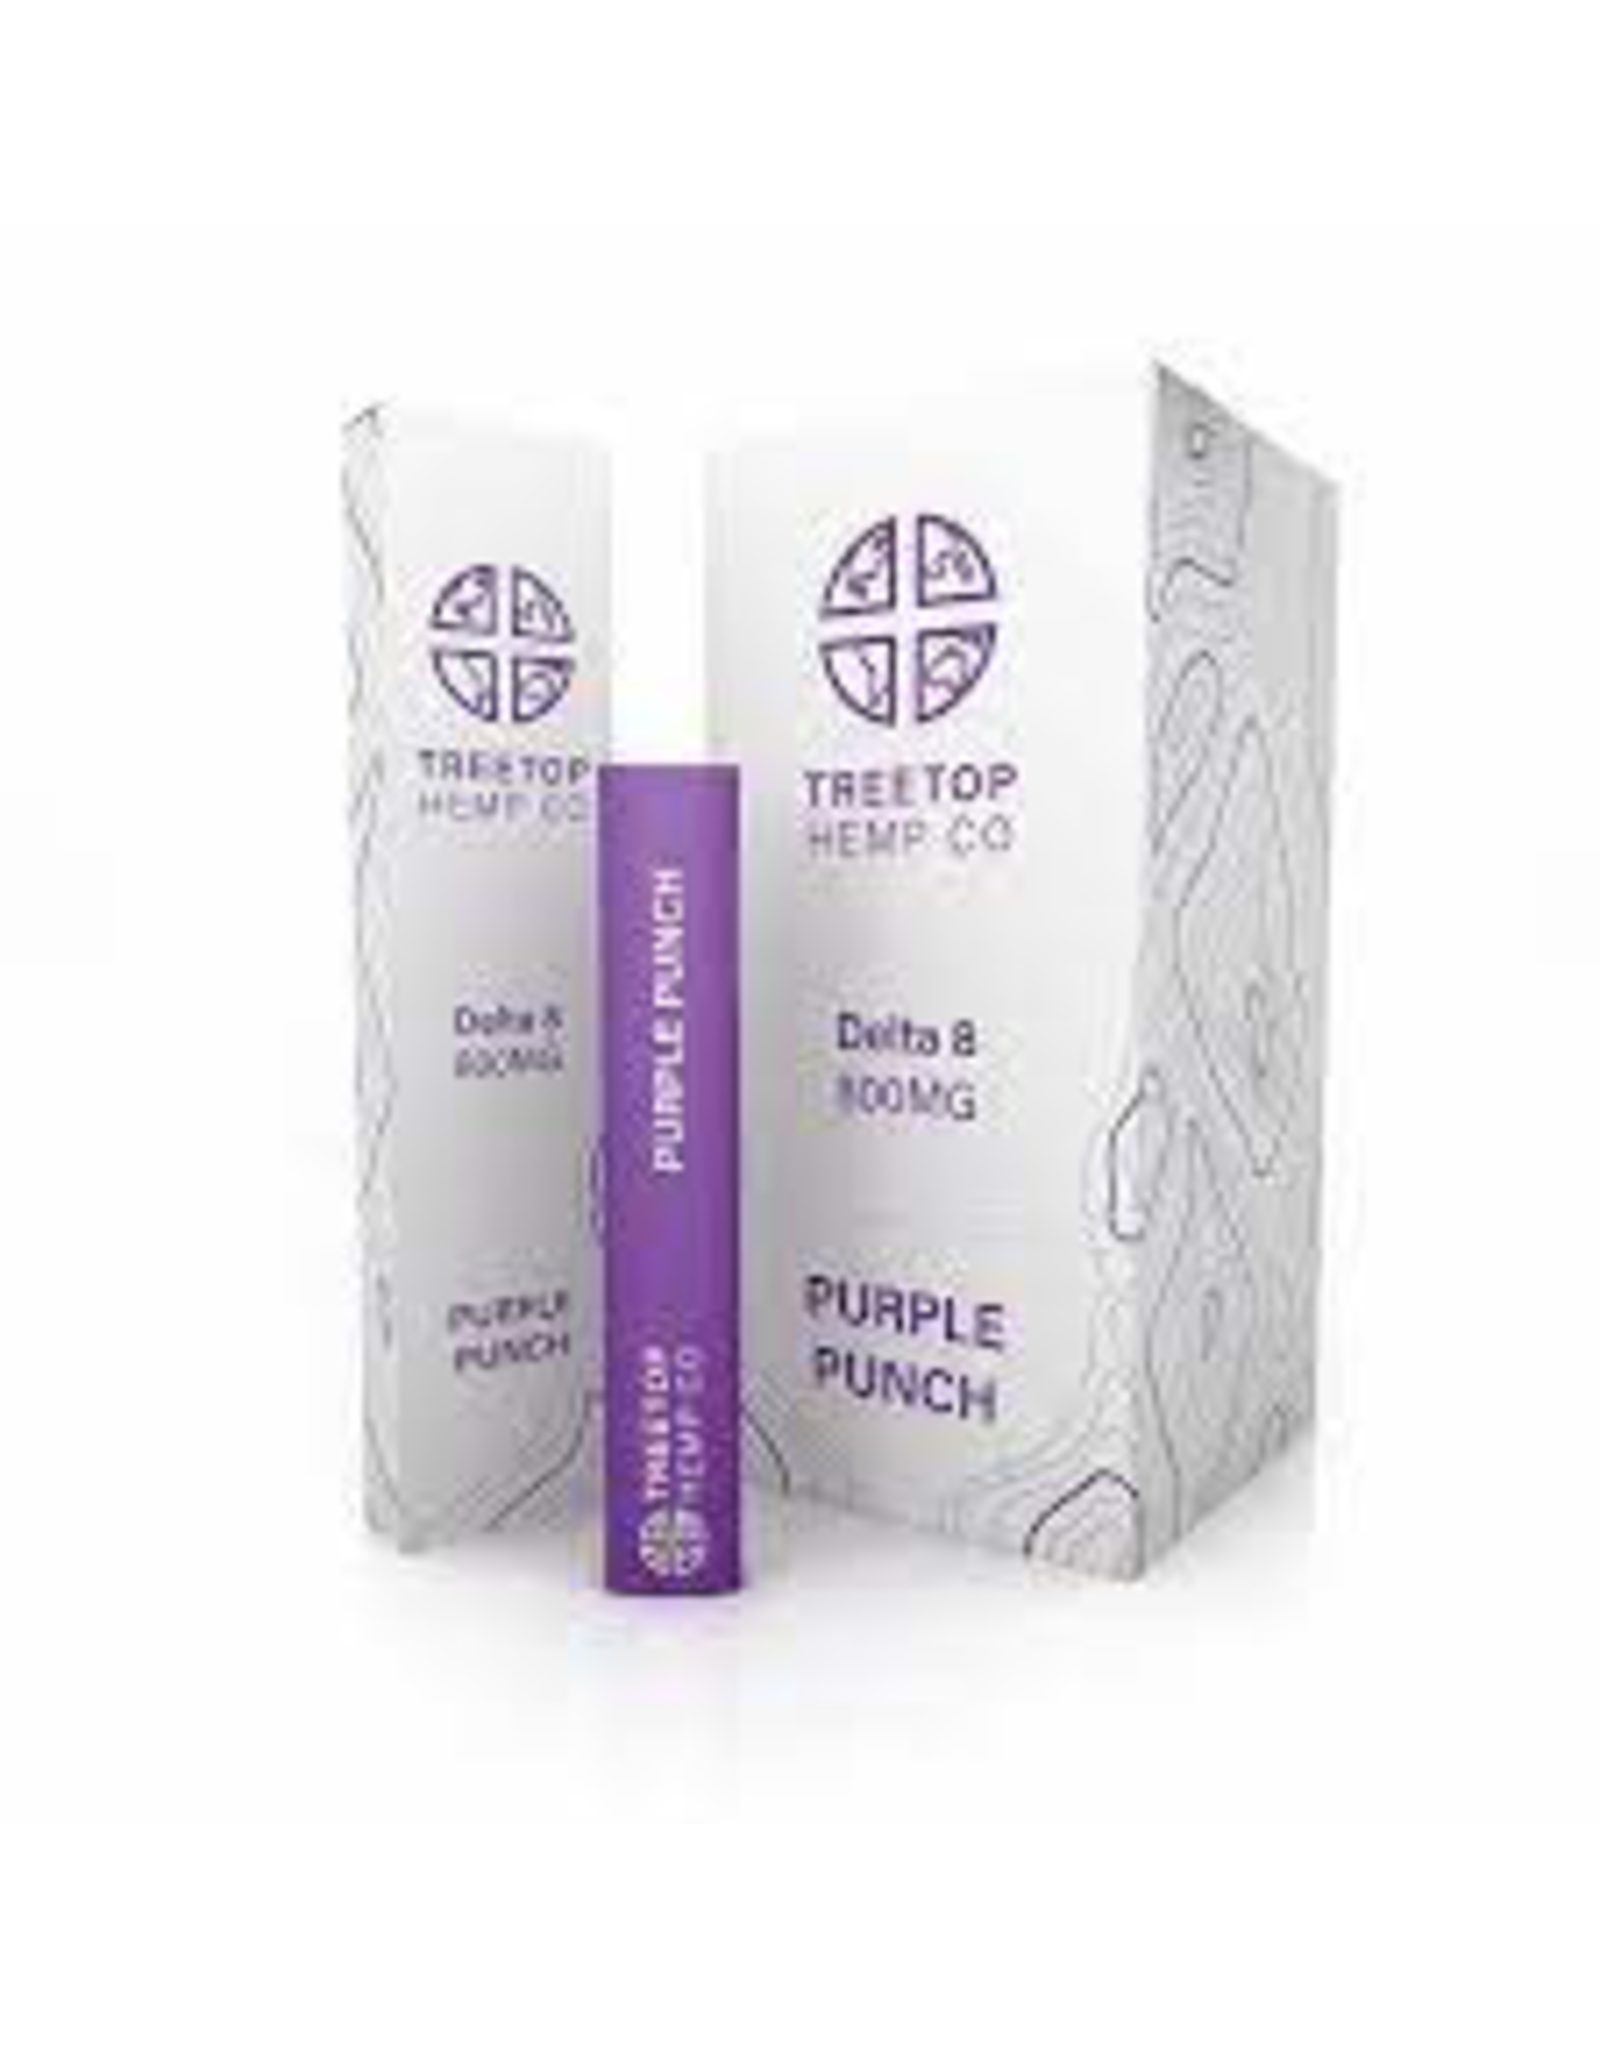 Treetop Hemp Co. TreeTop Hemp CO. 800MG Delta 8 Purple Punch  Disposable